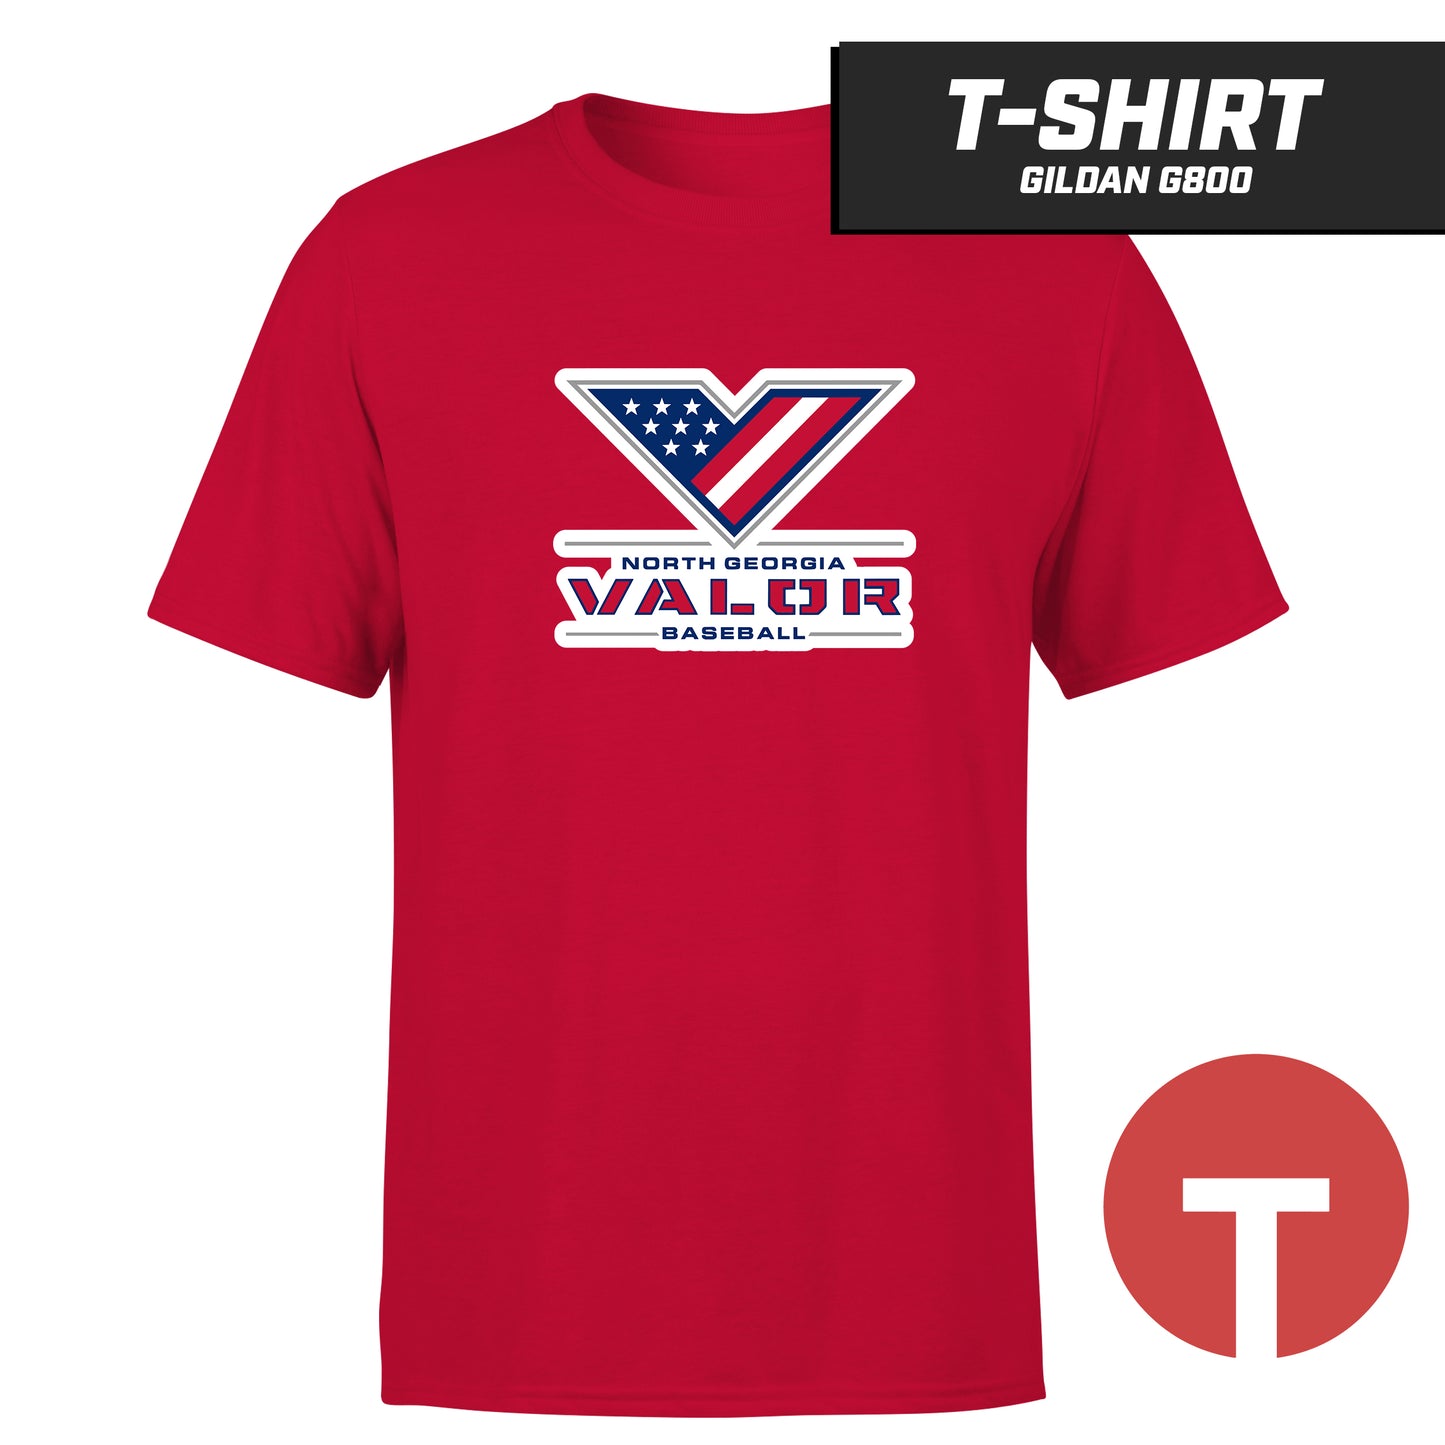 North Georgia Valor - T-Shirt Gildan G800